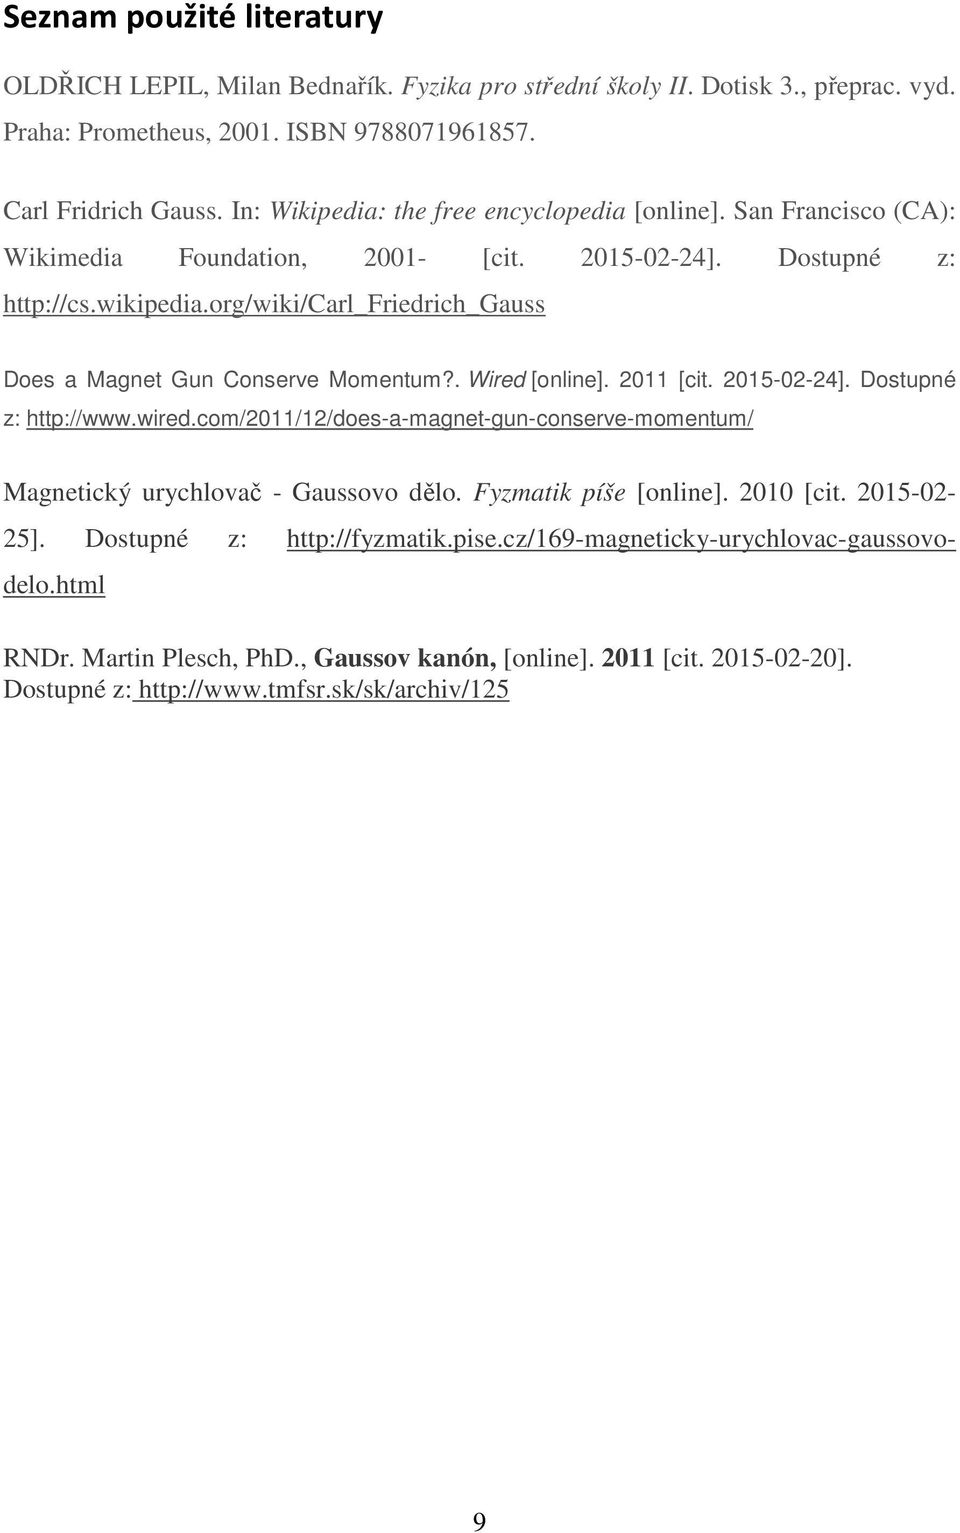 org/wiki/carl_friedrich_gauss Does a Magnet Gun Conserve Momentum?. Wired [online]. 2011 [cit. 2015-02-24]. Dostupné z: http://www.wired.